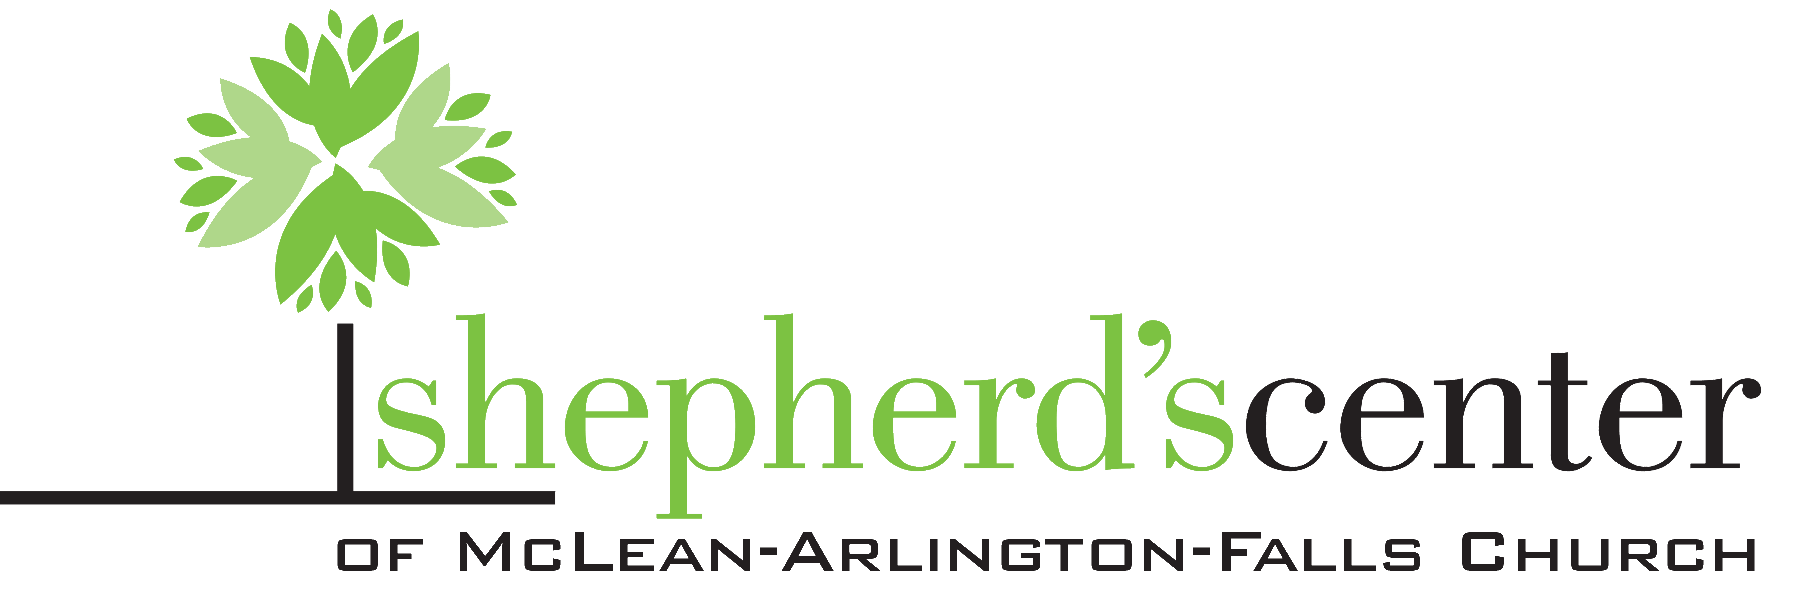 The Shepherd's Center of McLean-Arlington-Falls Church (SCMAFC)